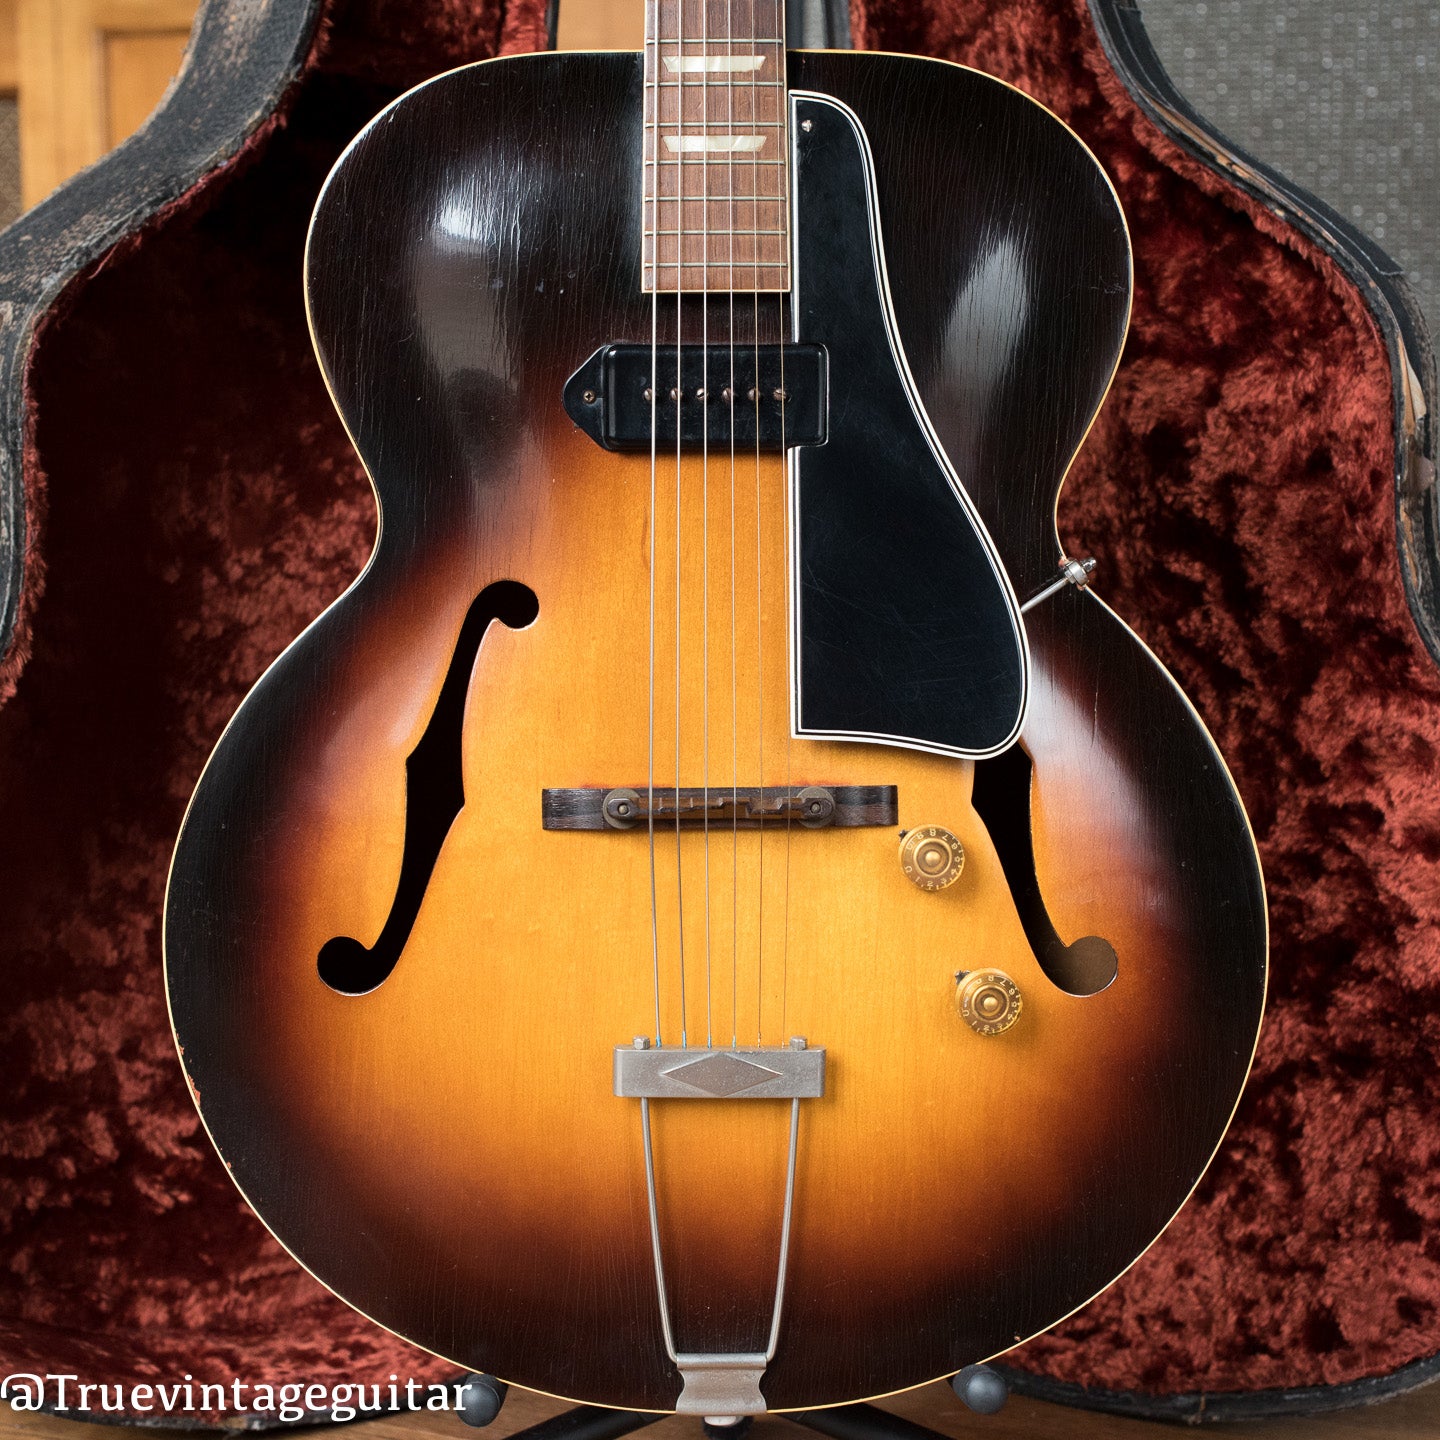 Vintage 1955 Gibson ES-150 electric guitar